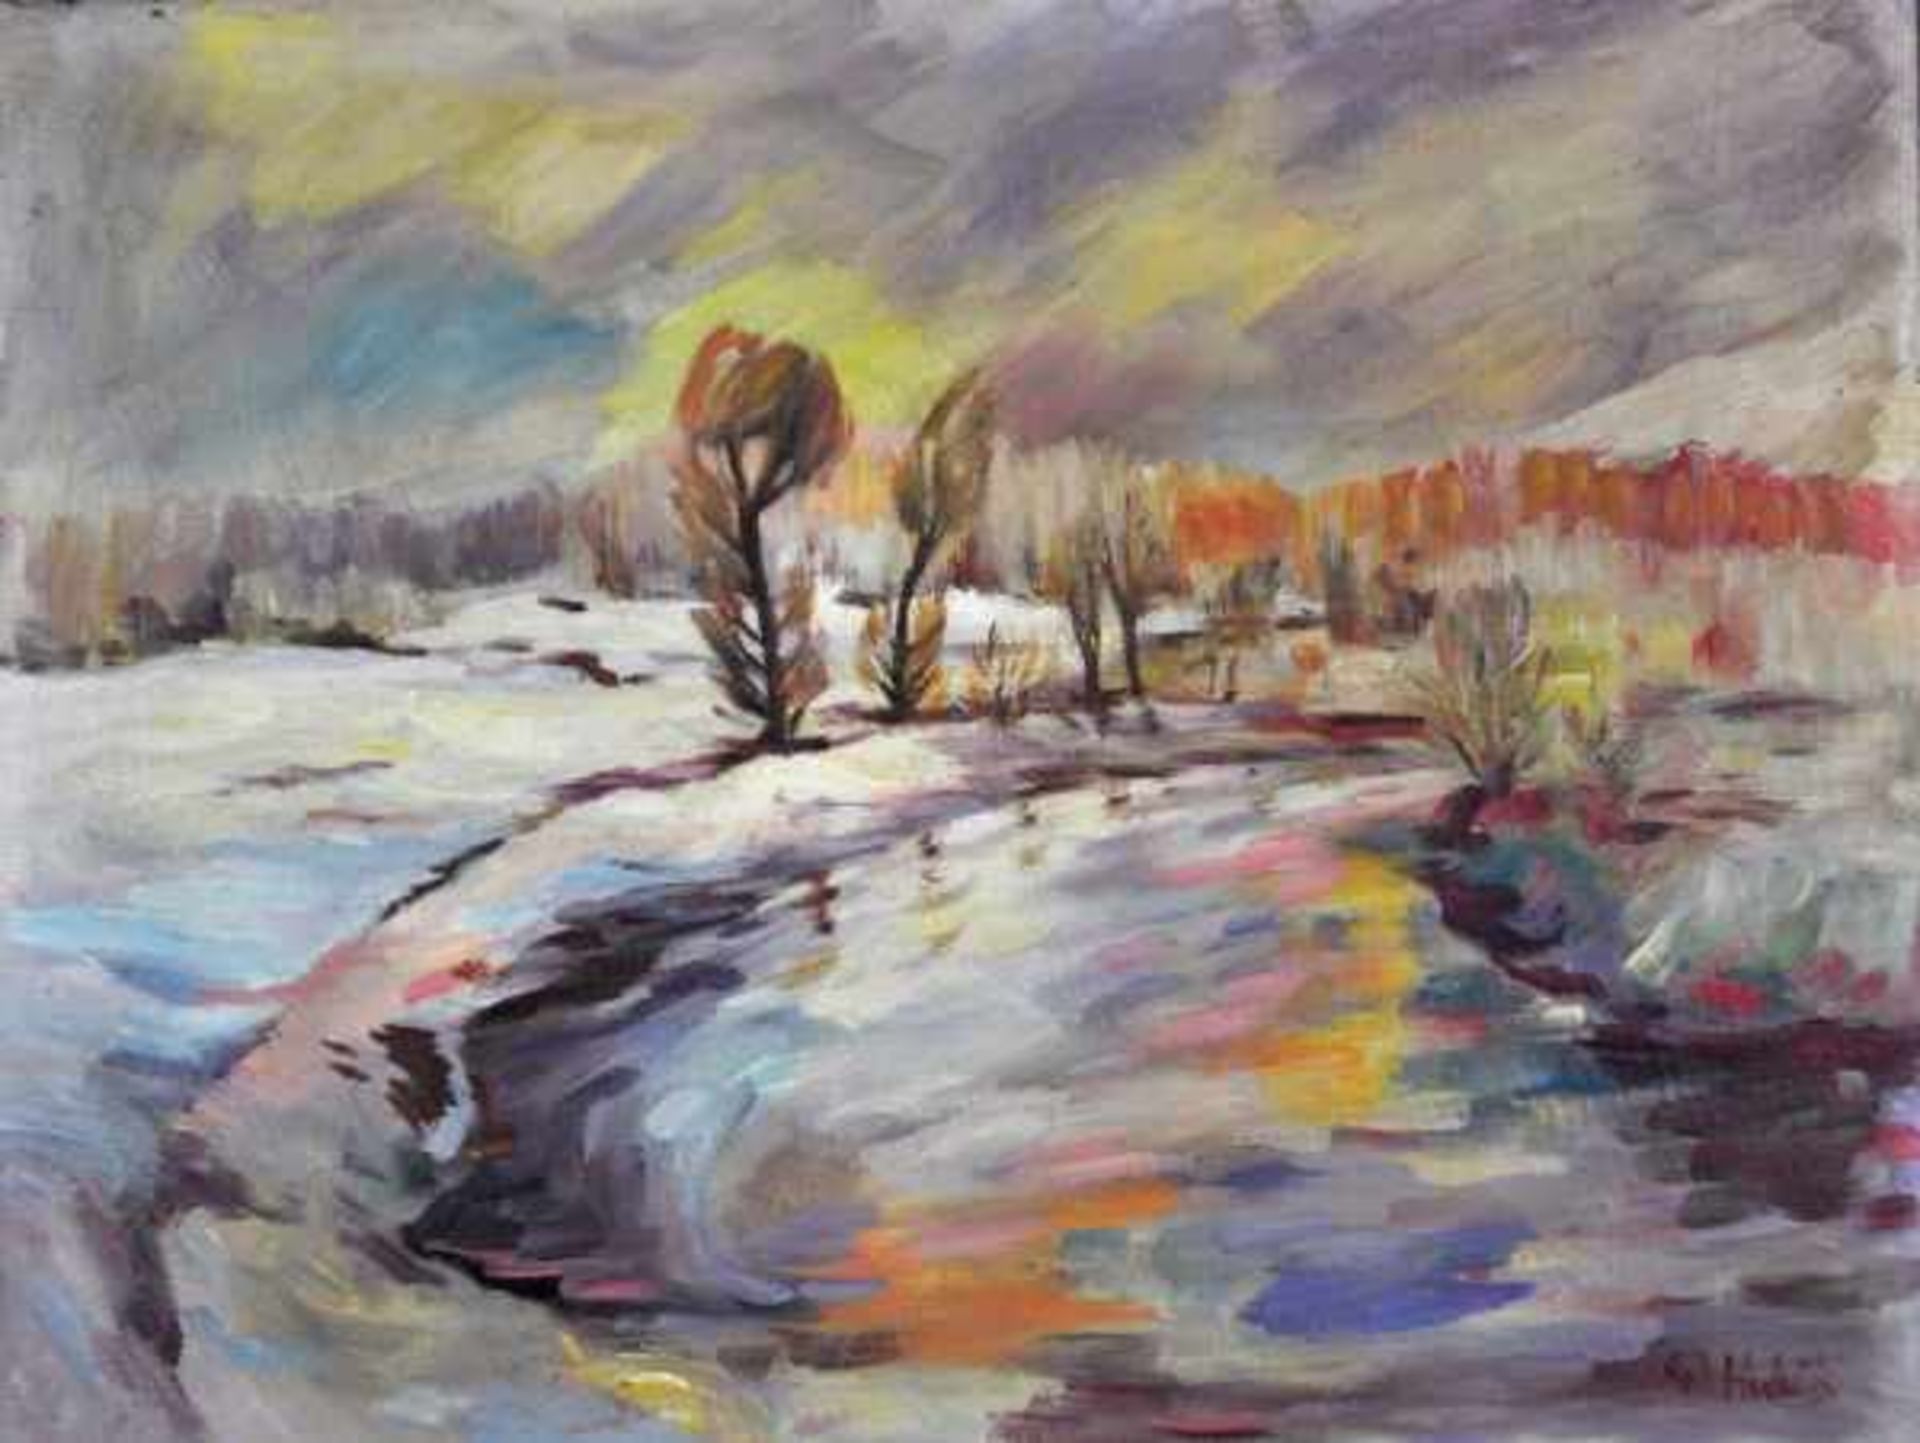 HUDECEK Antonin (1872 Loucká - 1941 Castolovice) "Winterlandschaft" mit Fluss und Bäumen, in